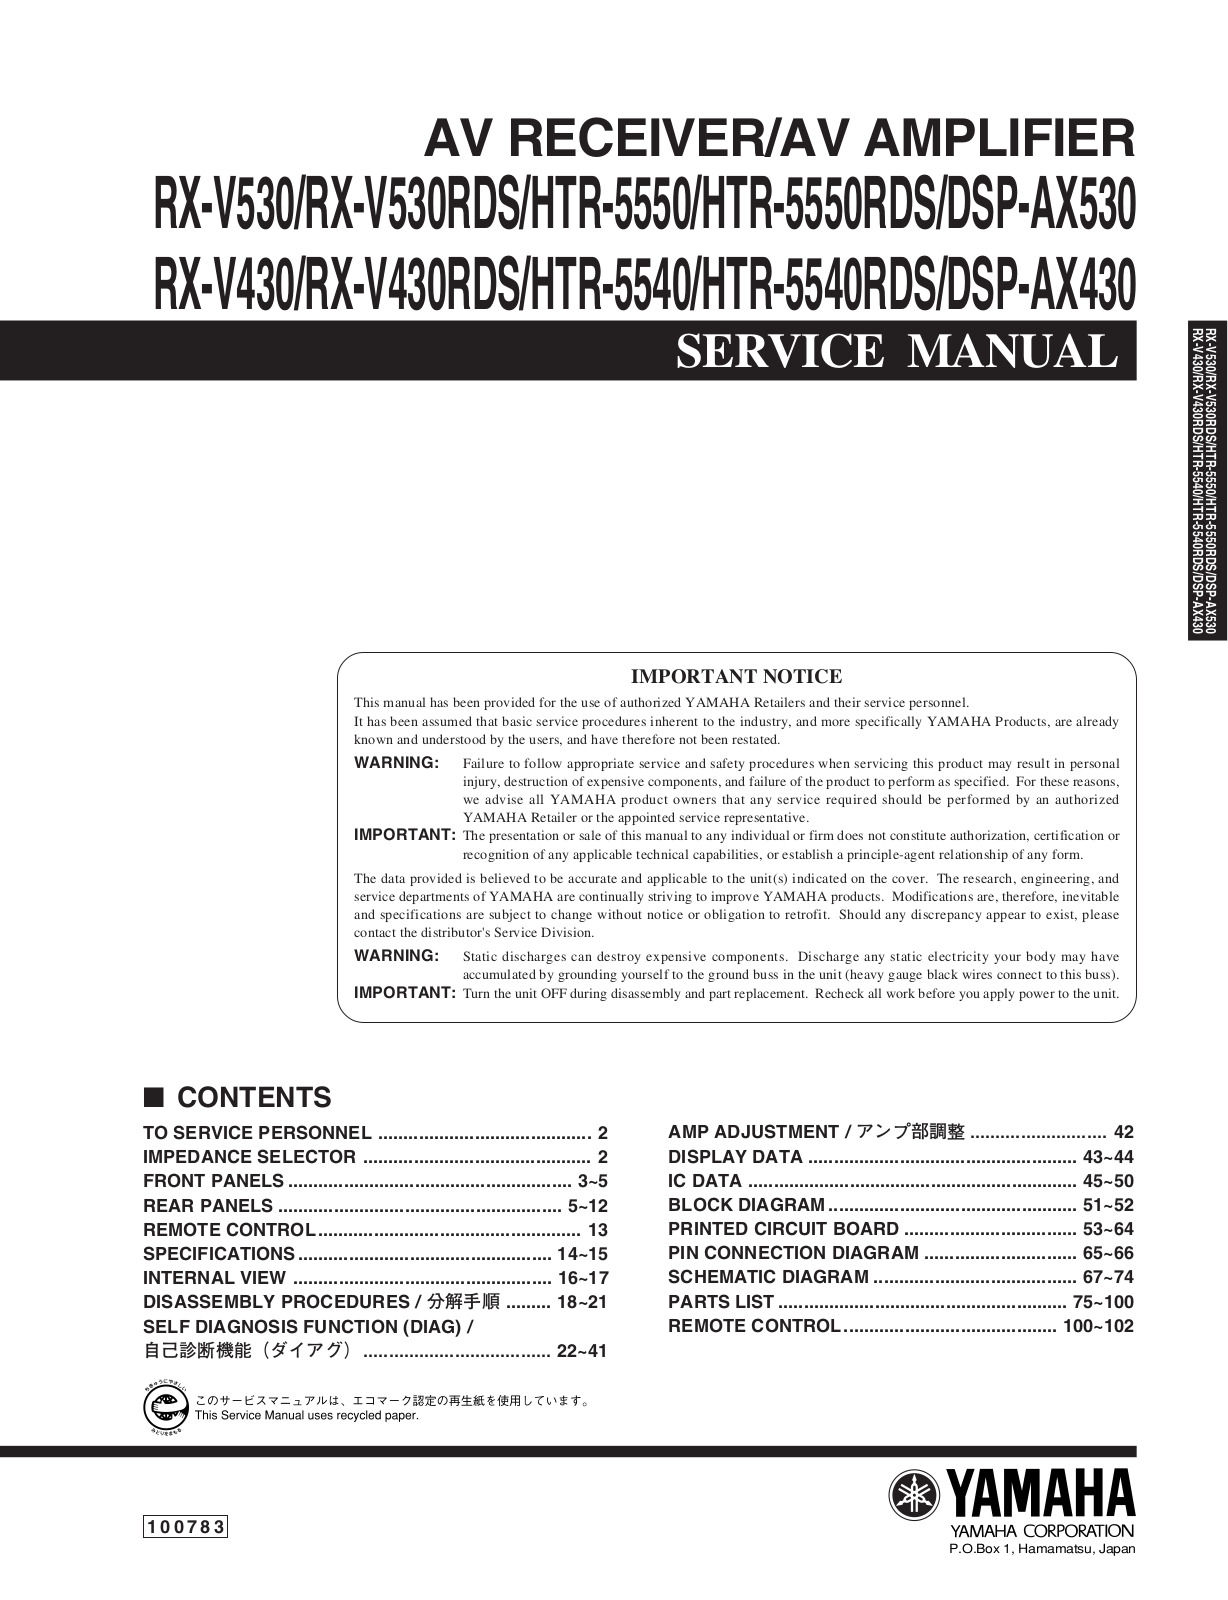 Yamaha RXV-530, DSPAX-350, HTR-5540, HTR-5550 Service manual